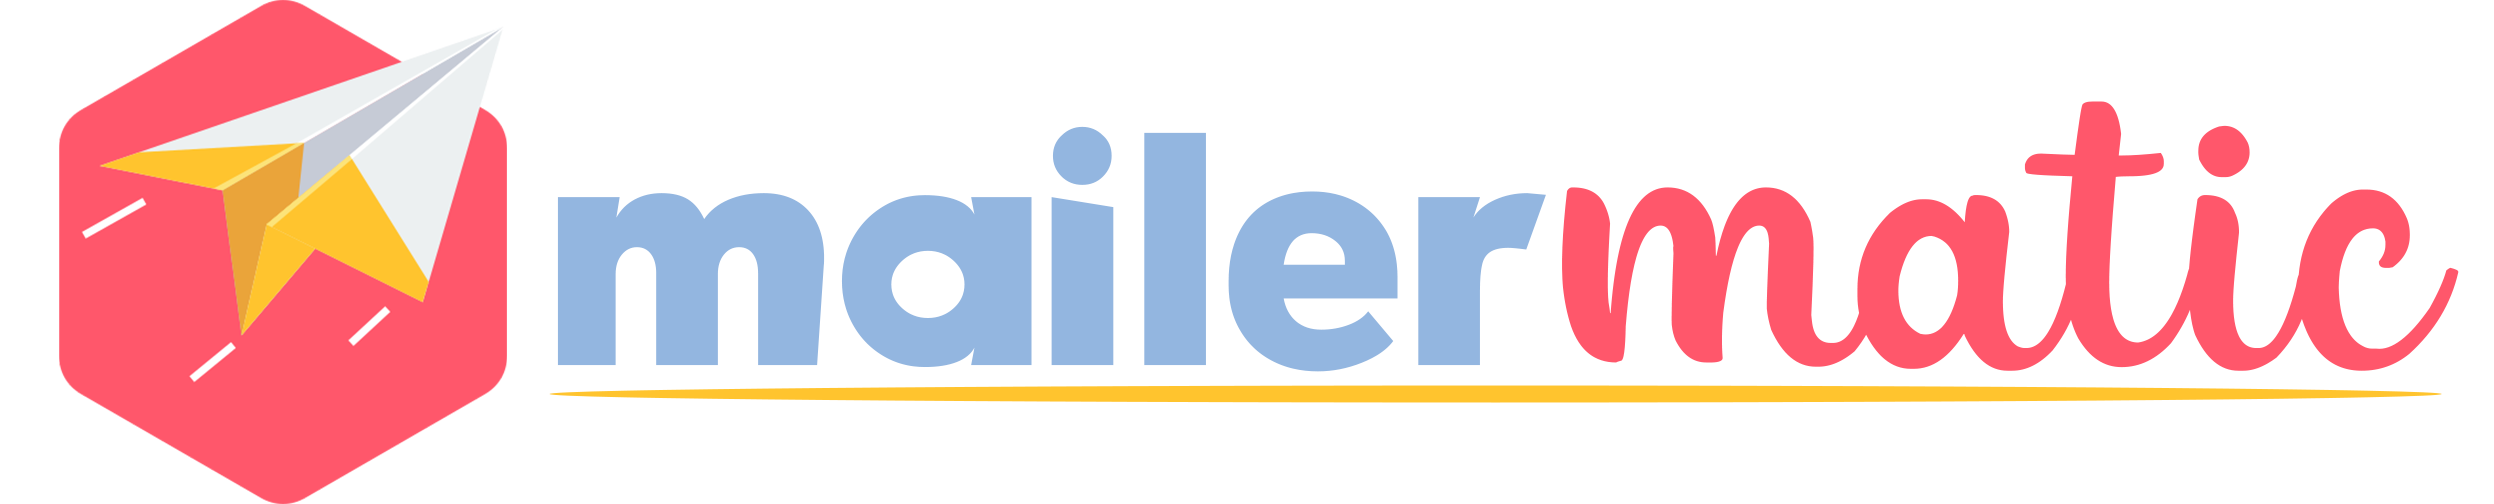 Mailermatic Logo